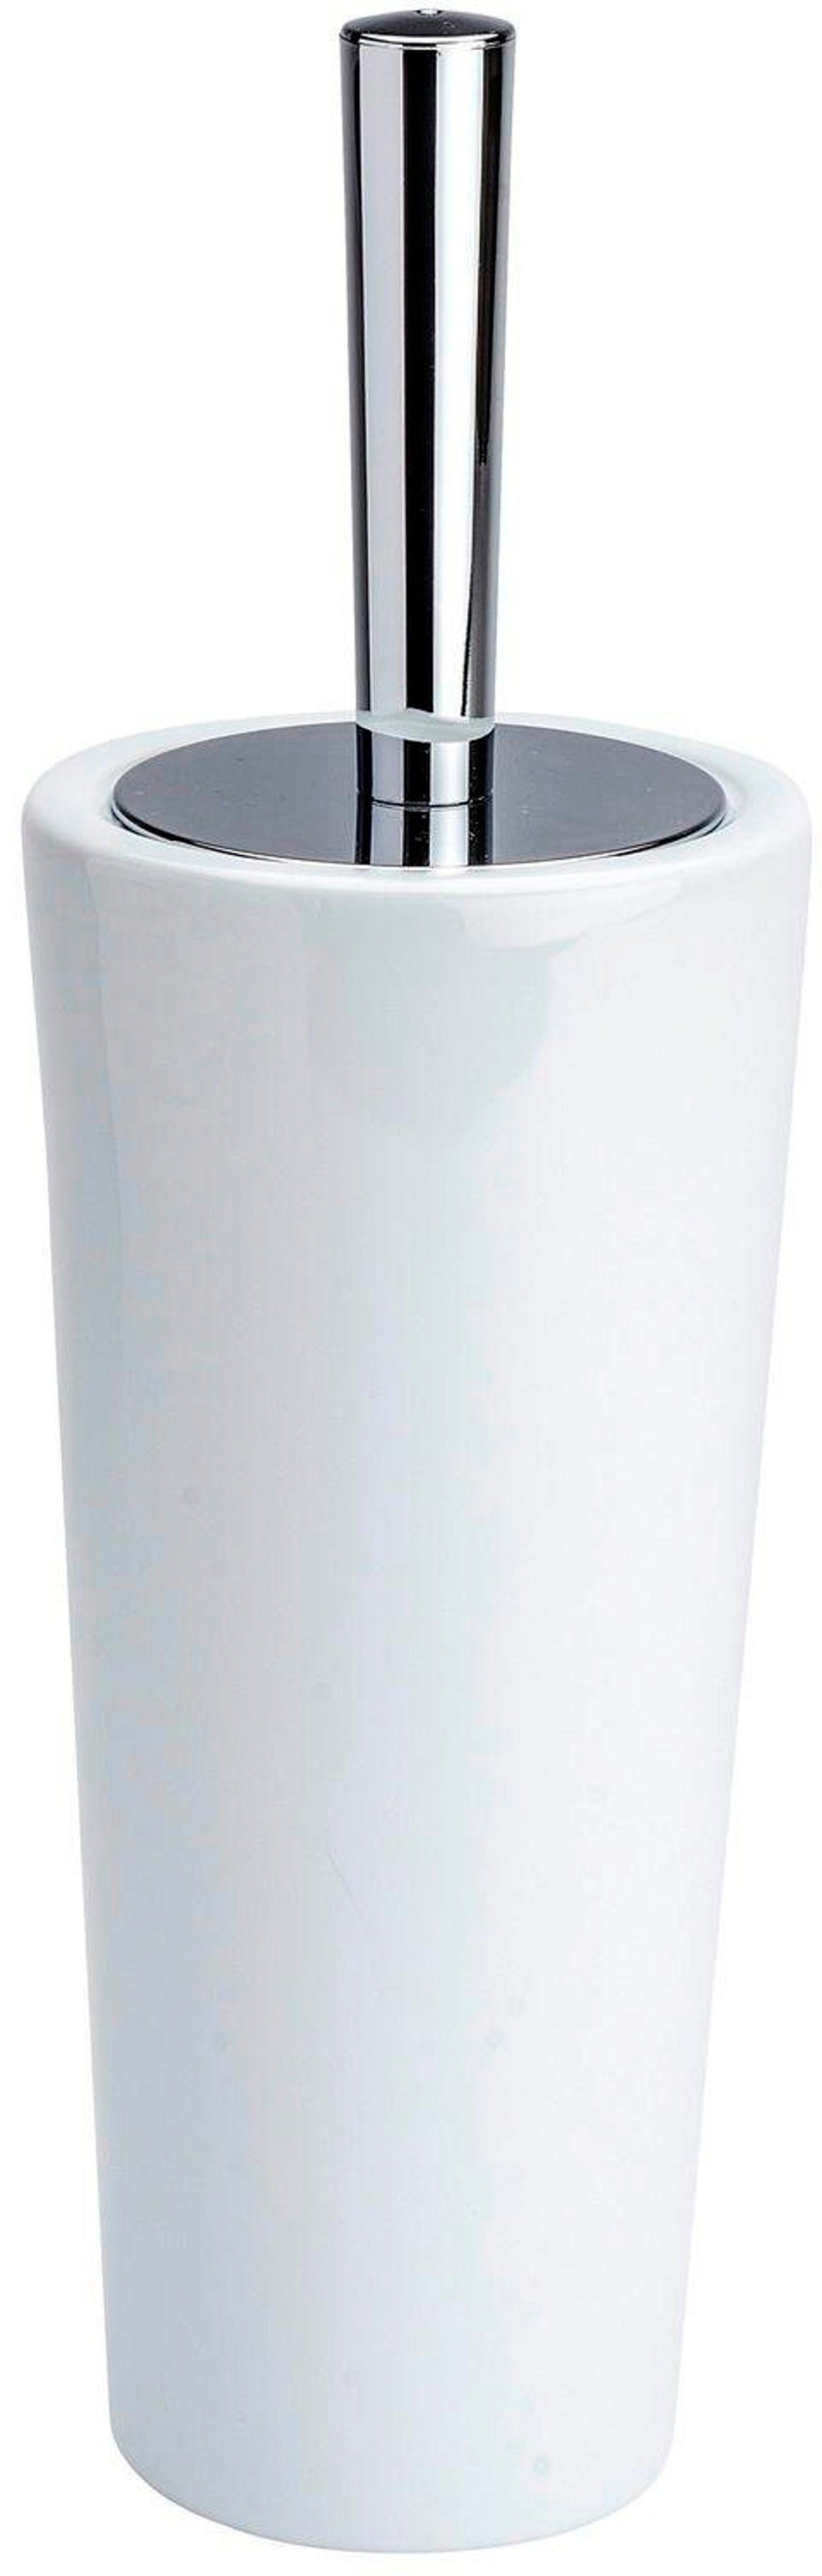 Keramik, Deckel, Acrylnitril-Butadien-Styrol (ABS) Coni, Keramik, WENKO WC-Garnitur Stiel: Material: